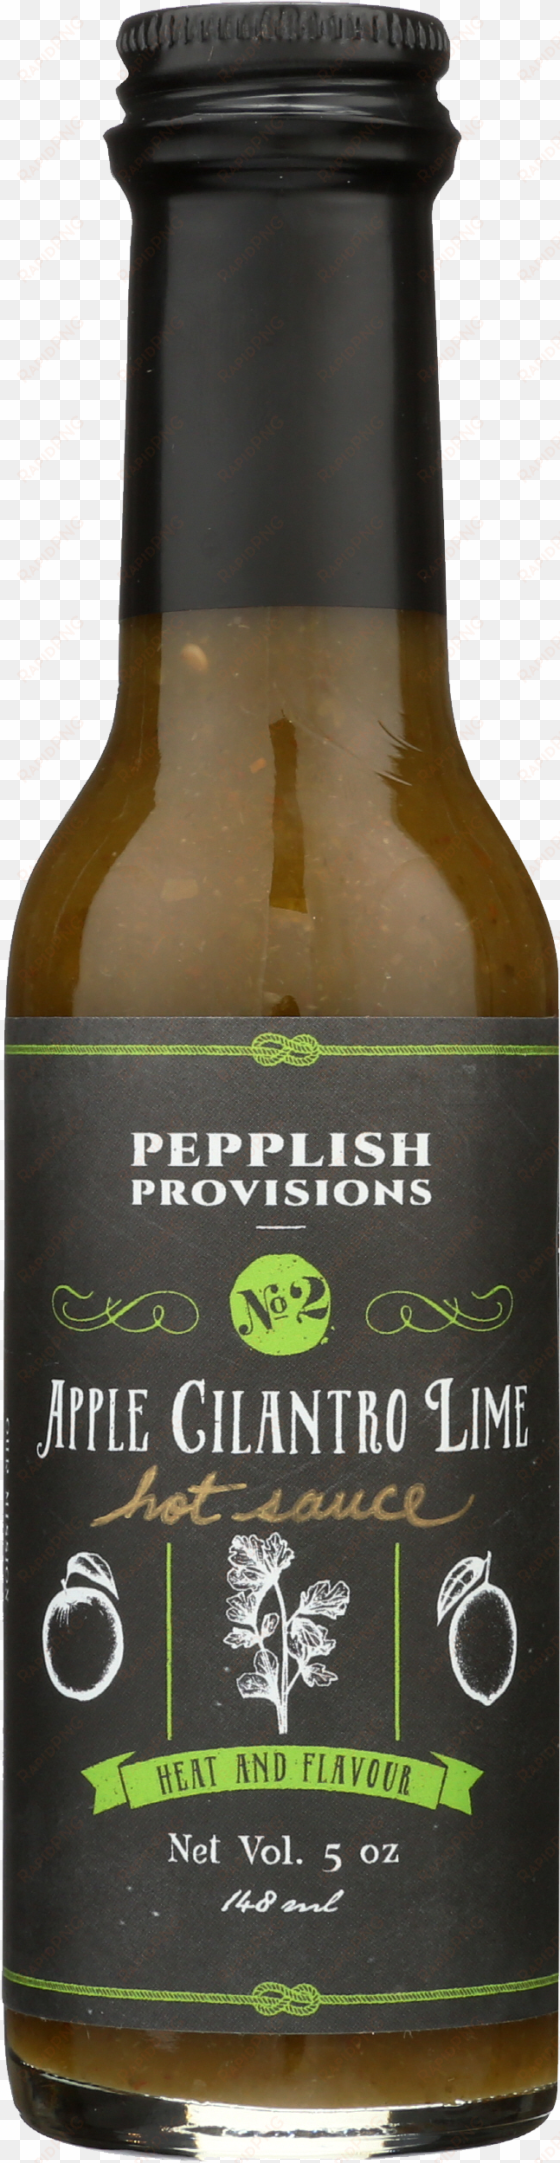 acl - pepplish provisions - apple cilantro lime hot sauce,